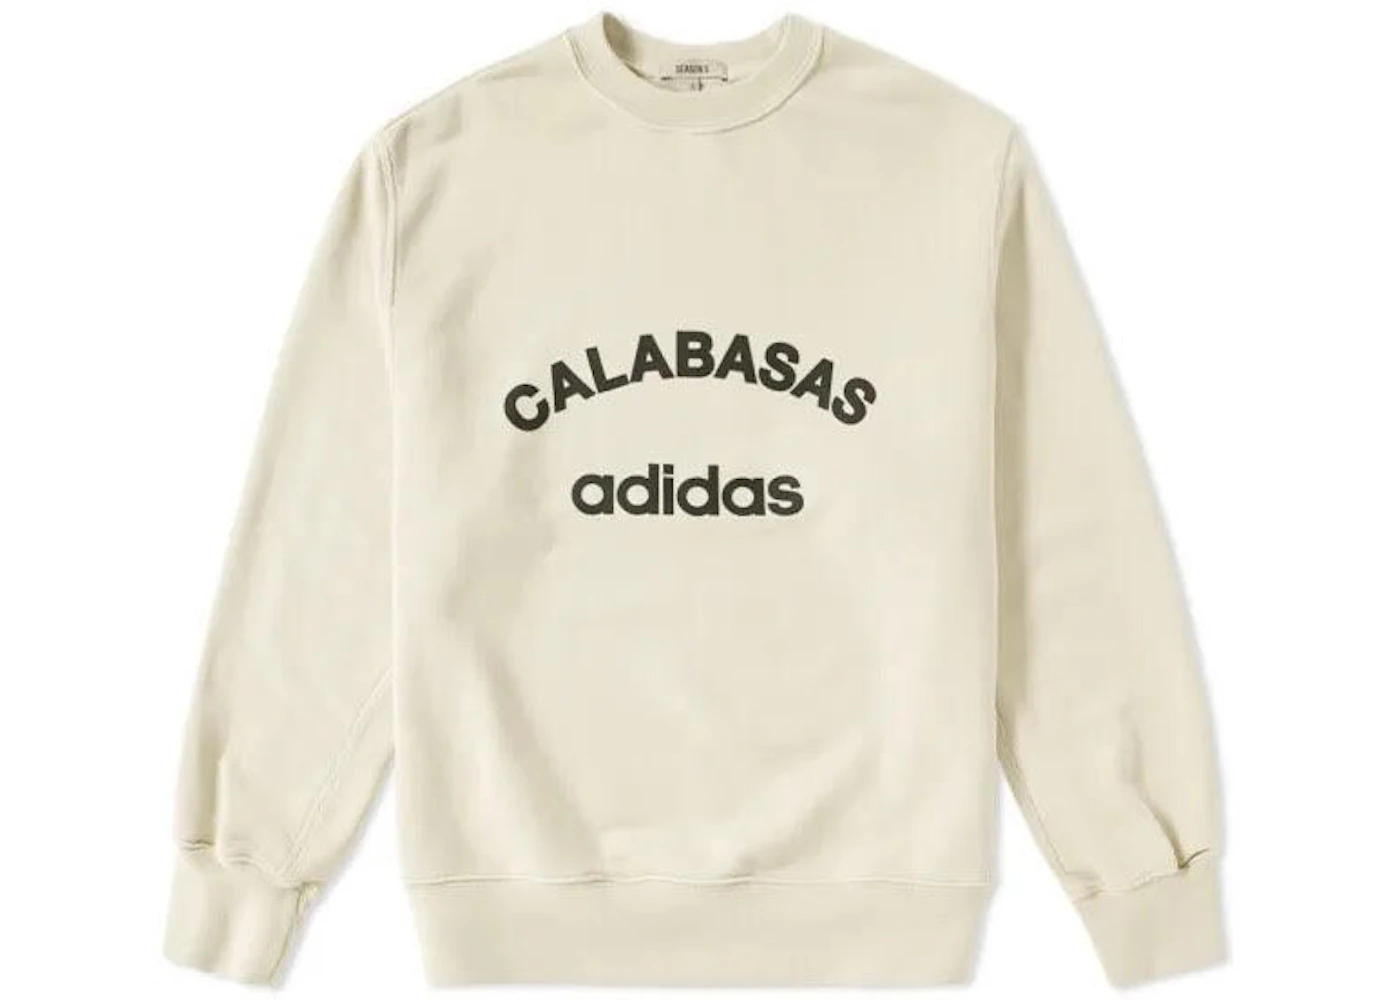 Soft feet favorite Inactive Yeezy Season 5 Adidas Calabasas Crewneck Sweatshirt Jupiter -